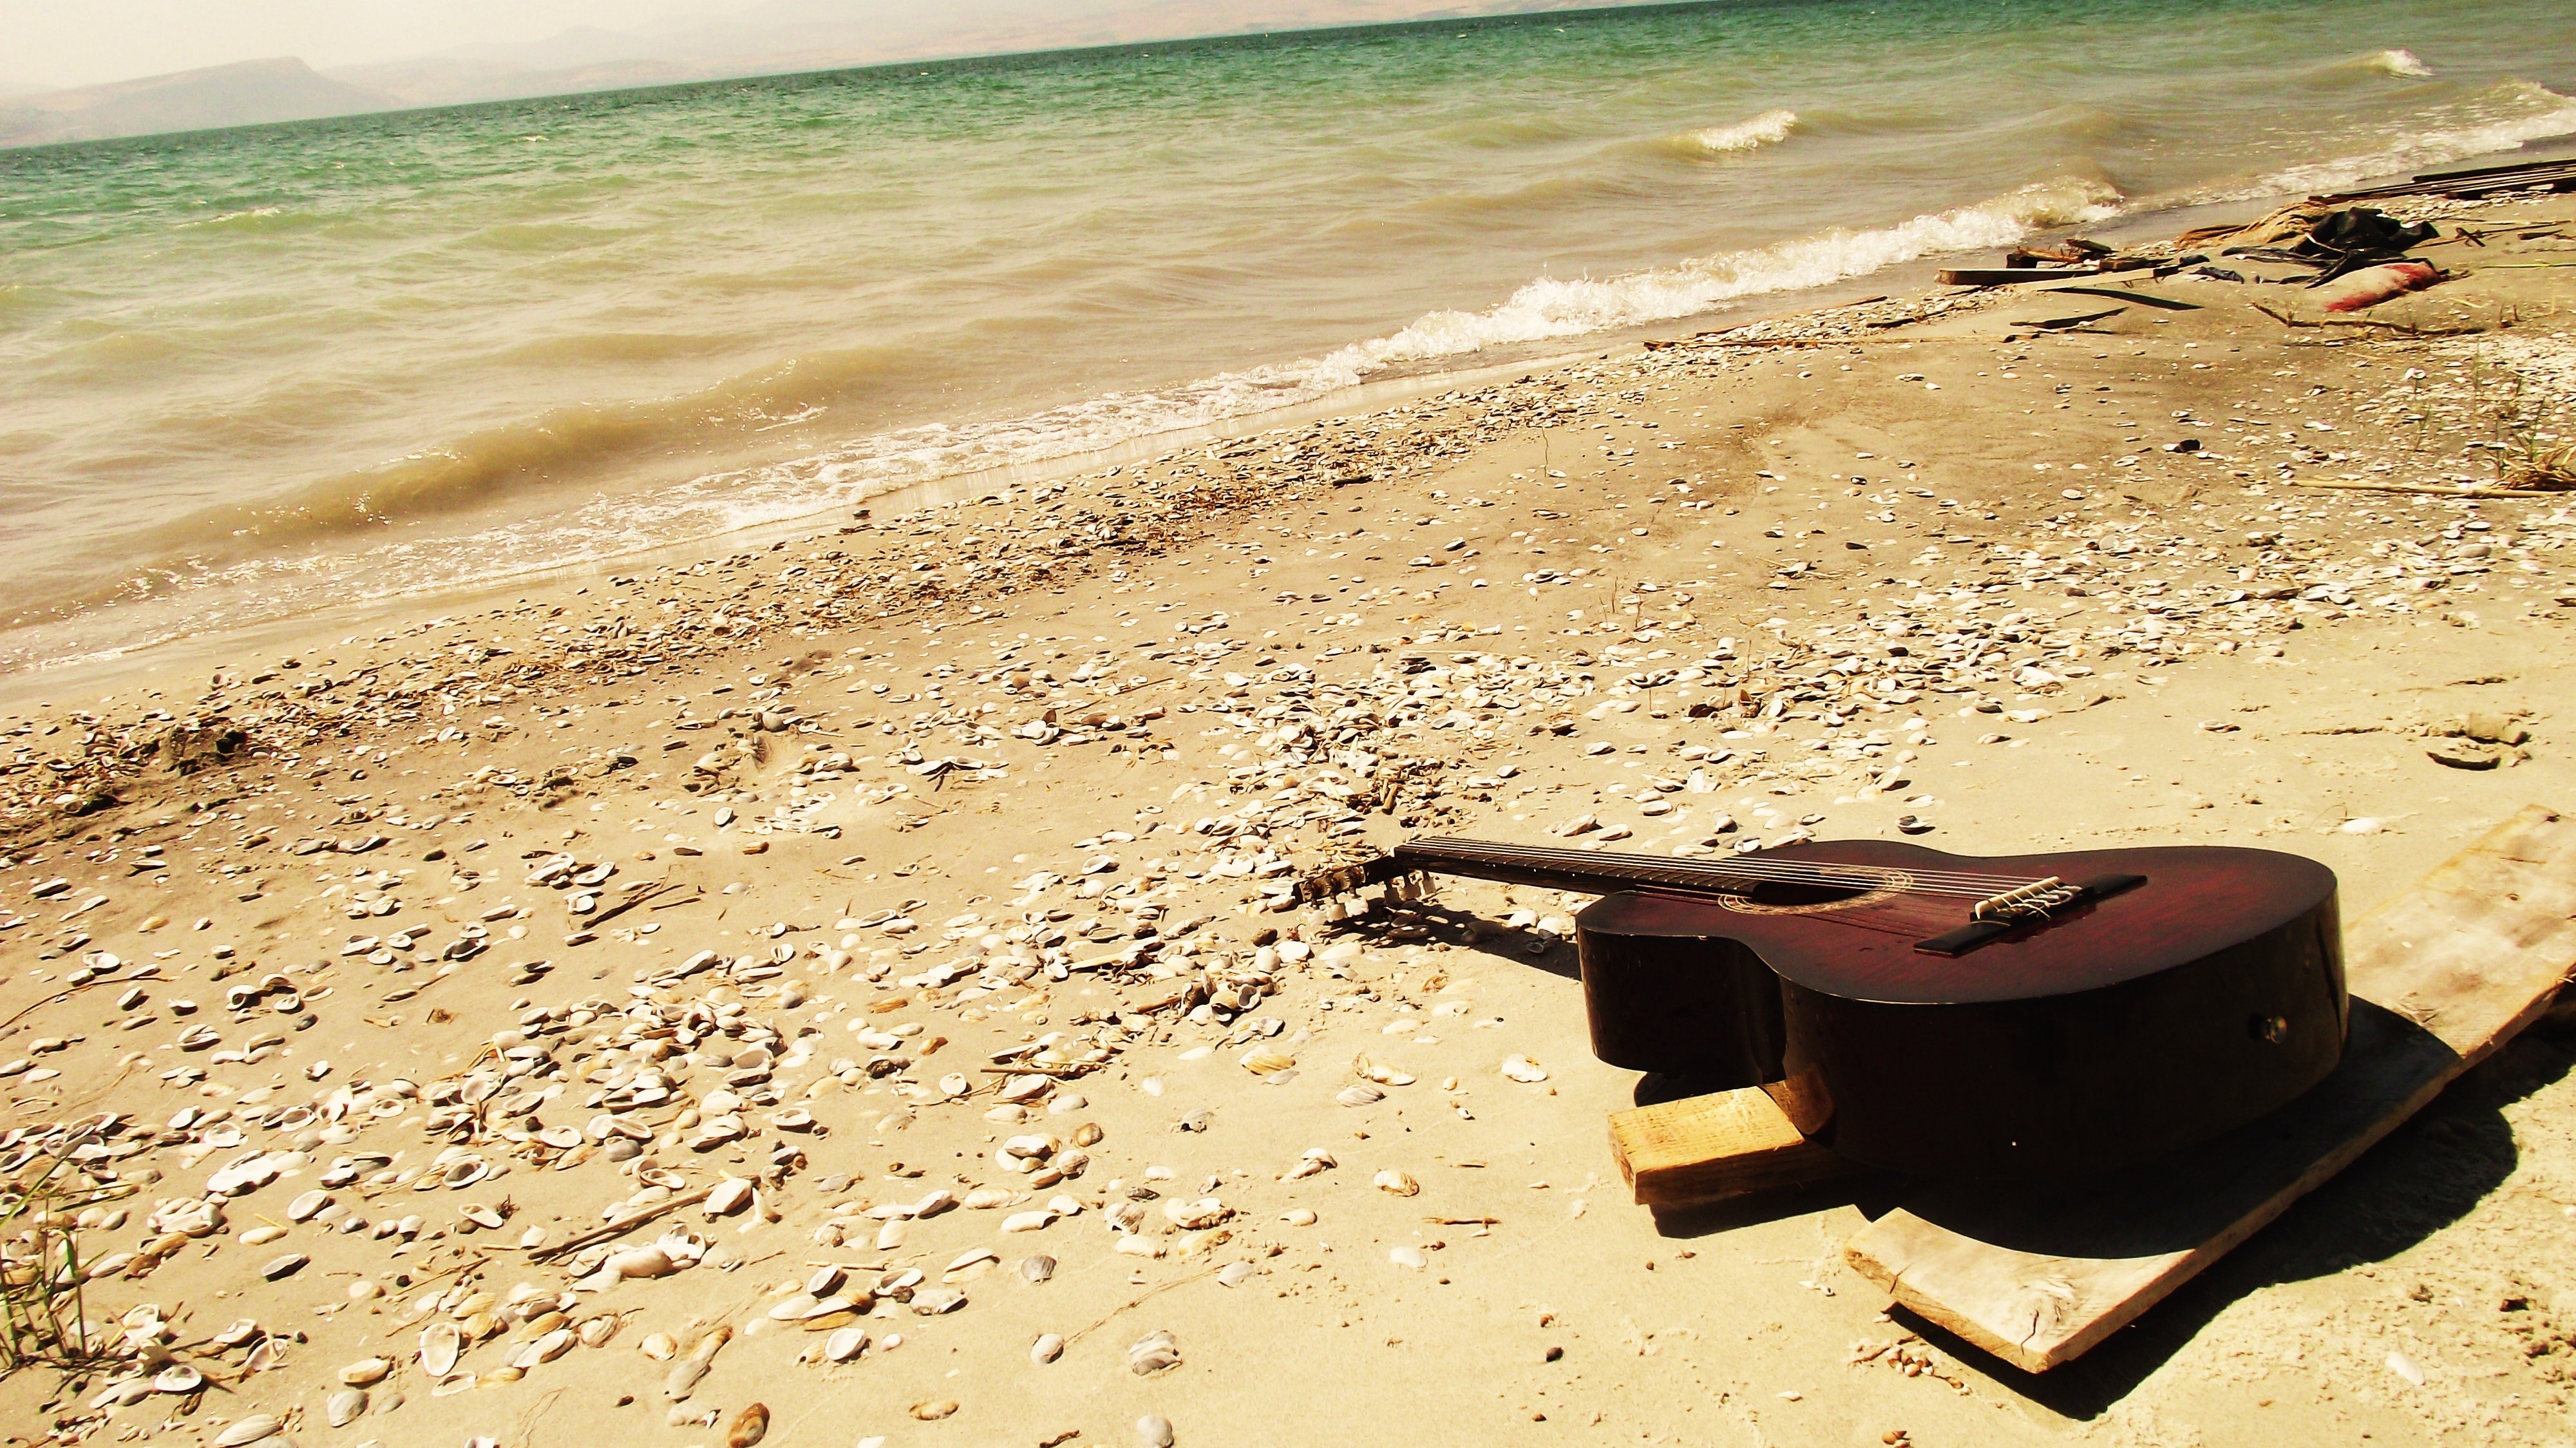 landscapes, sand, guitars, beaches - desktop wallpaper